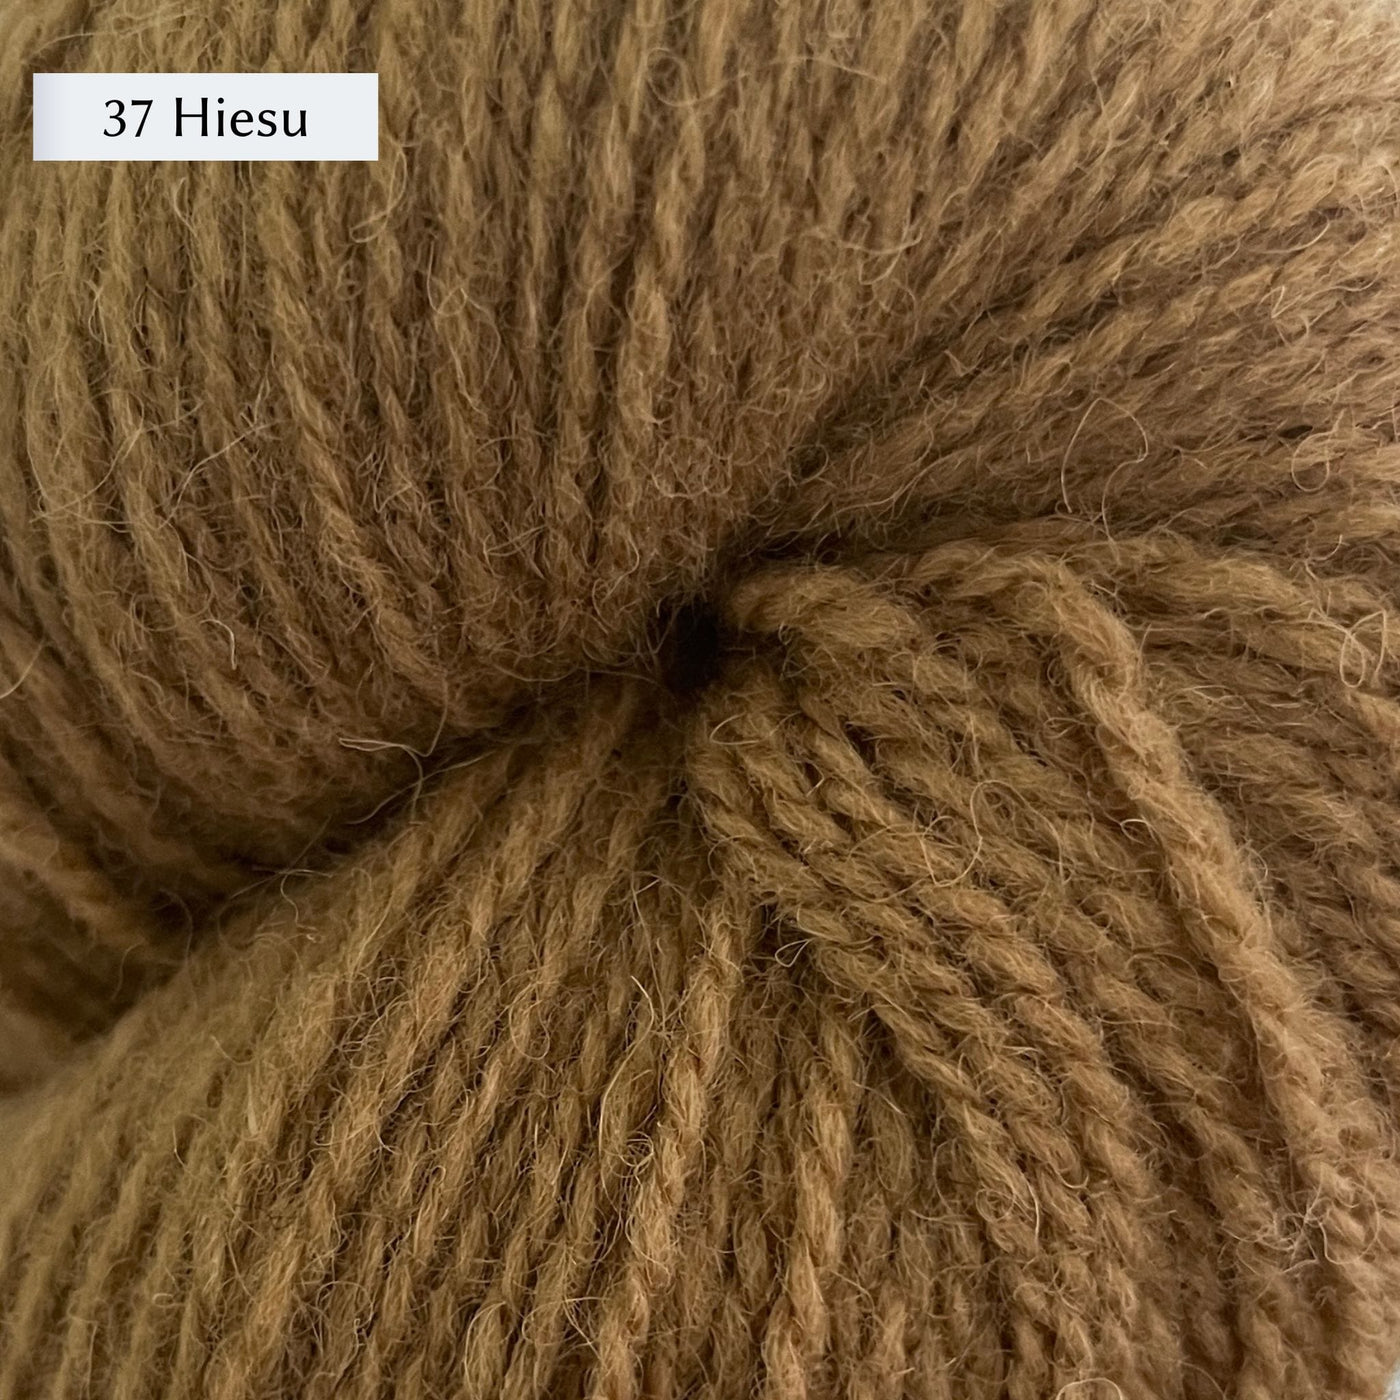 Tukuwool DK Yarn, 100% Finnish Wool shown in colorway 37 Heisu which is a tan/yellow color. 